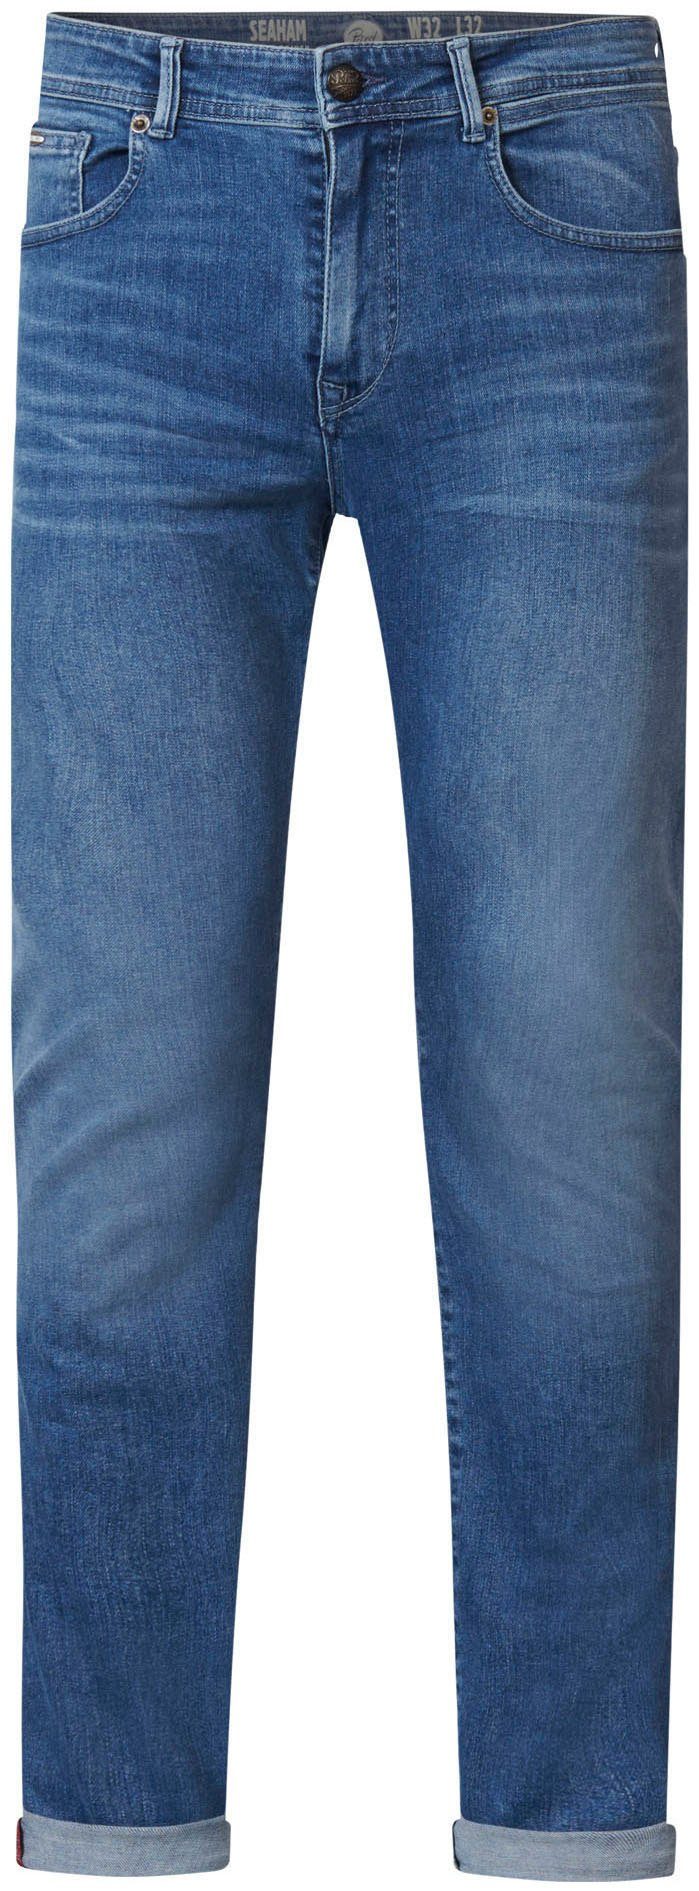 Petrol Industries slim fit jeans SEAHAM bright indigo